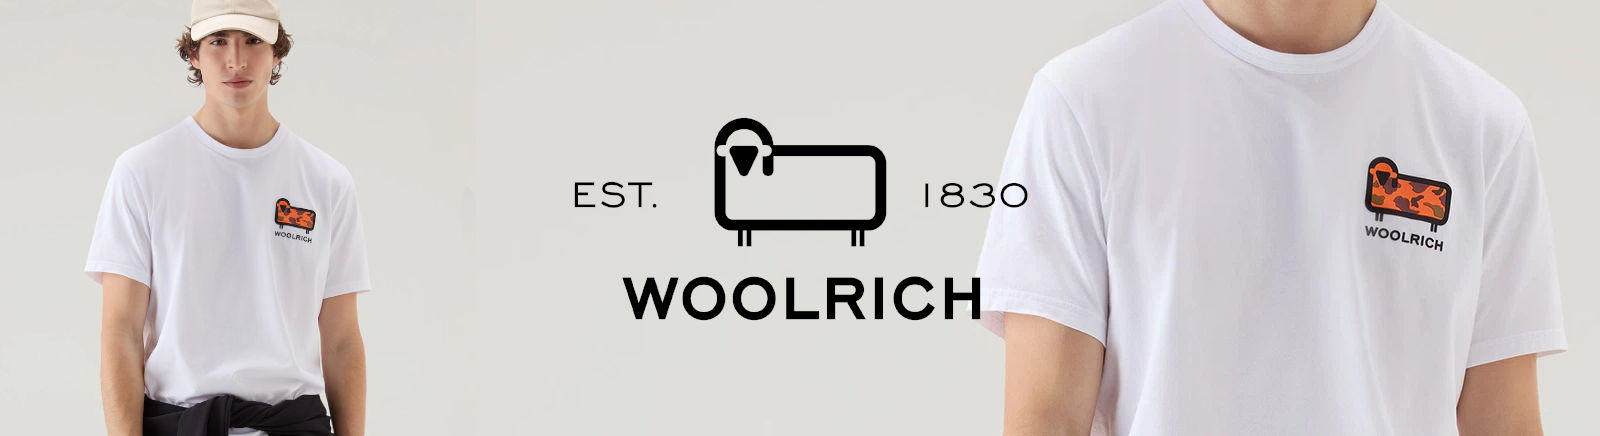 Woolrich Markenschuhe online shoppen im Prange Schuhe Shop